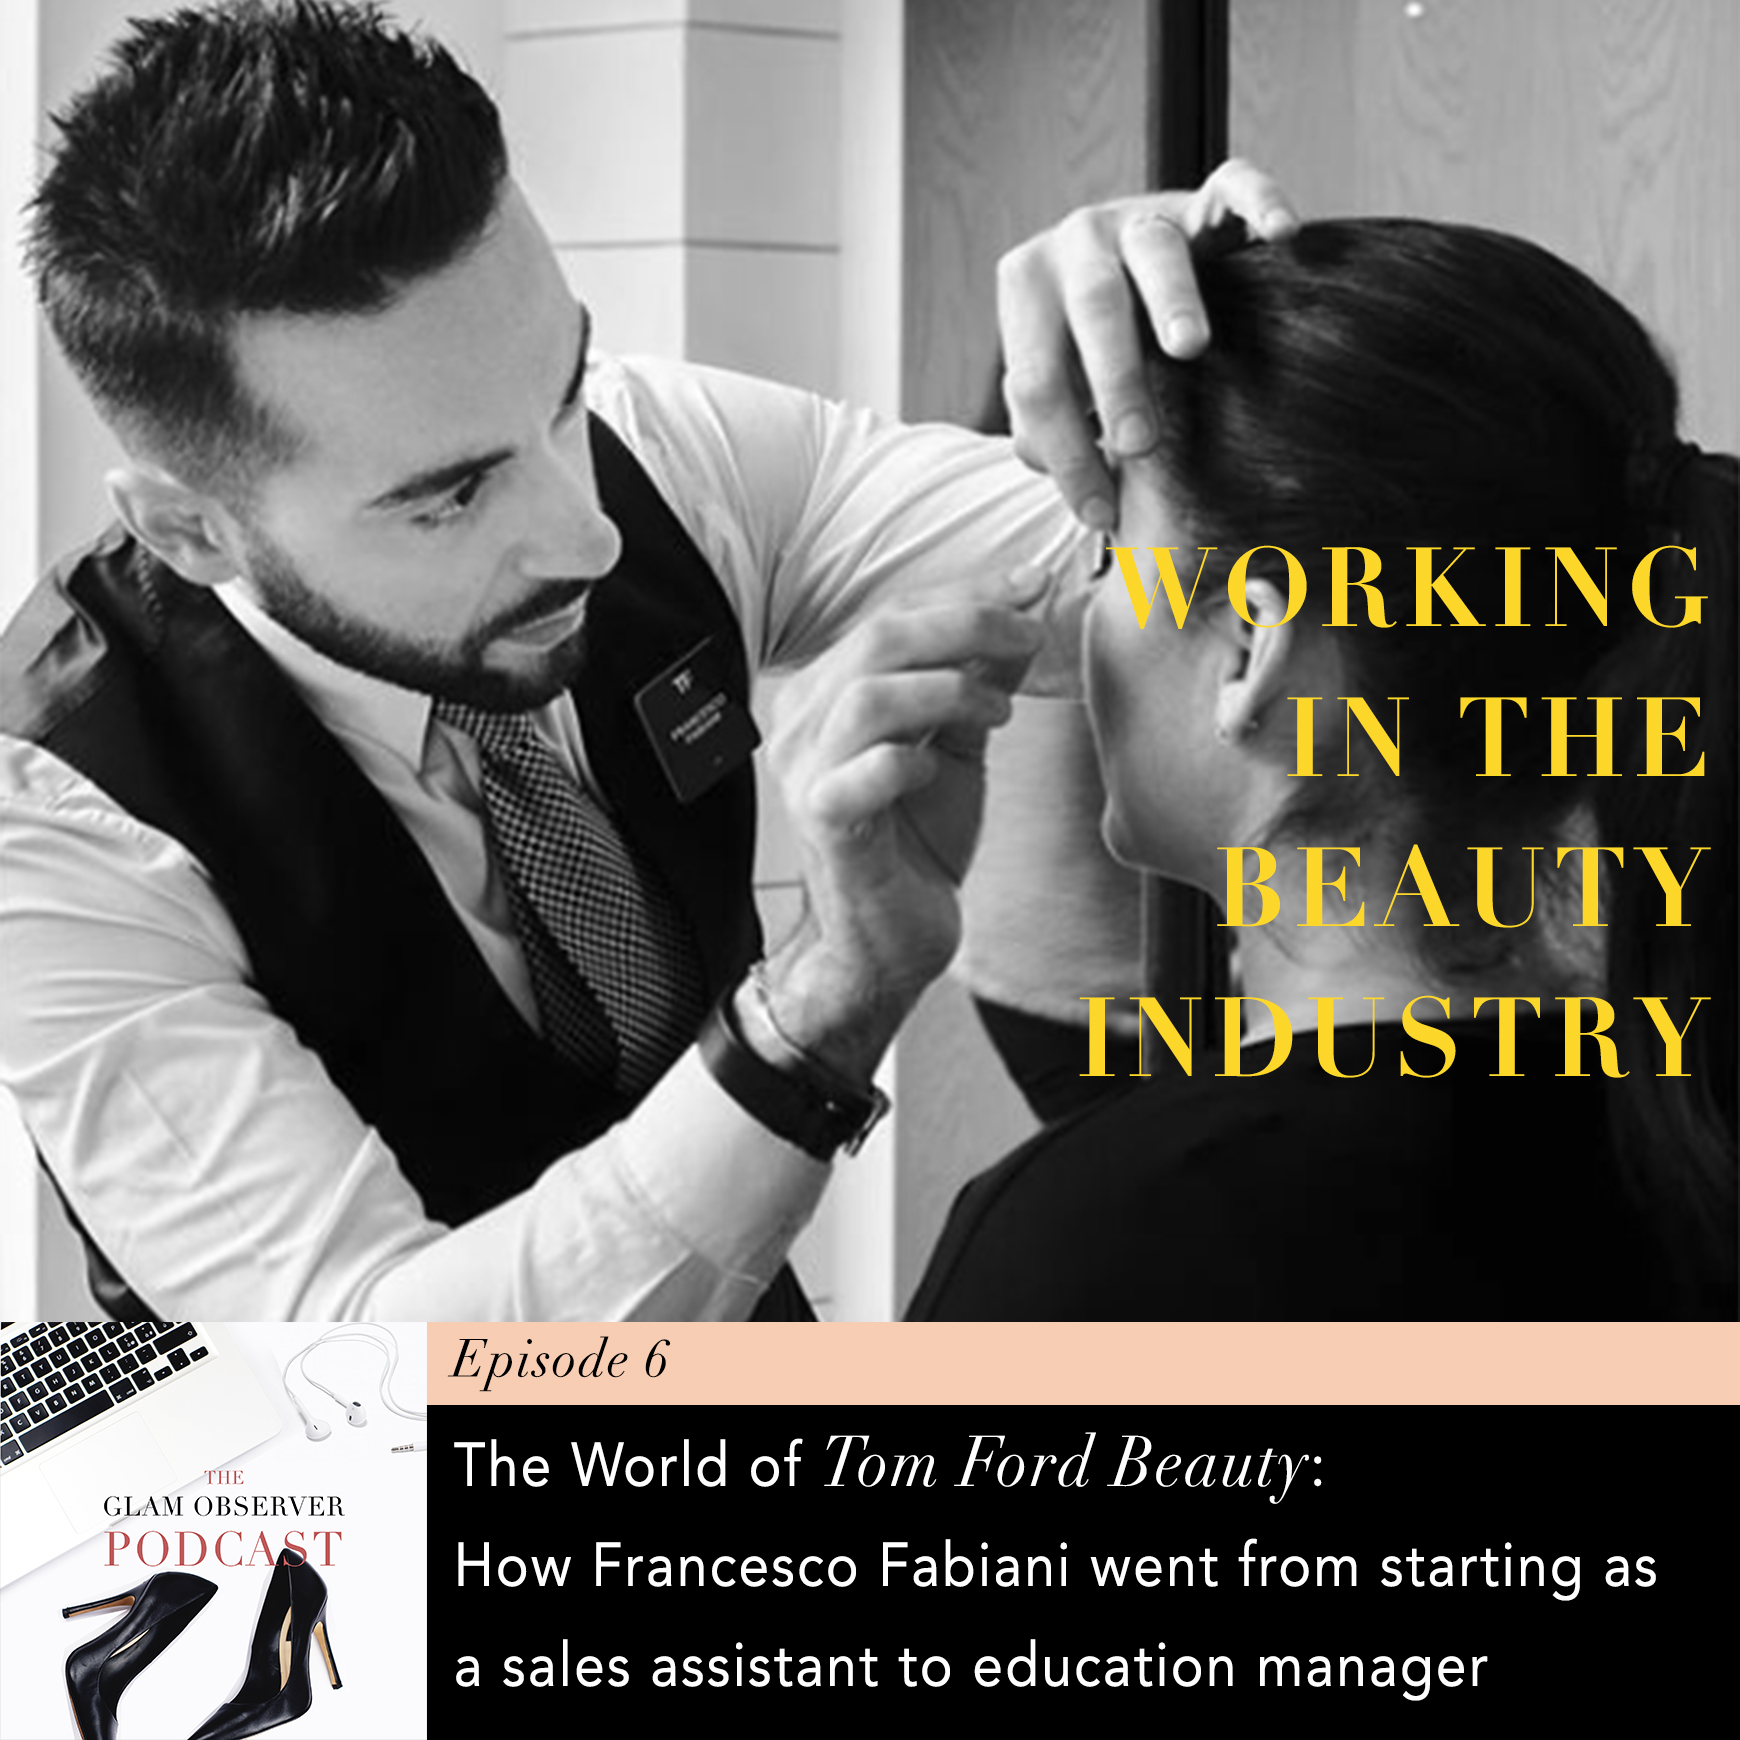 francesco-fabiani-tom-ford-beauty-career